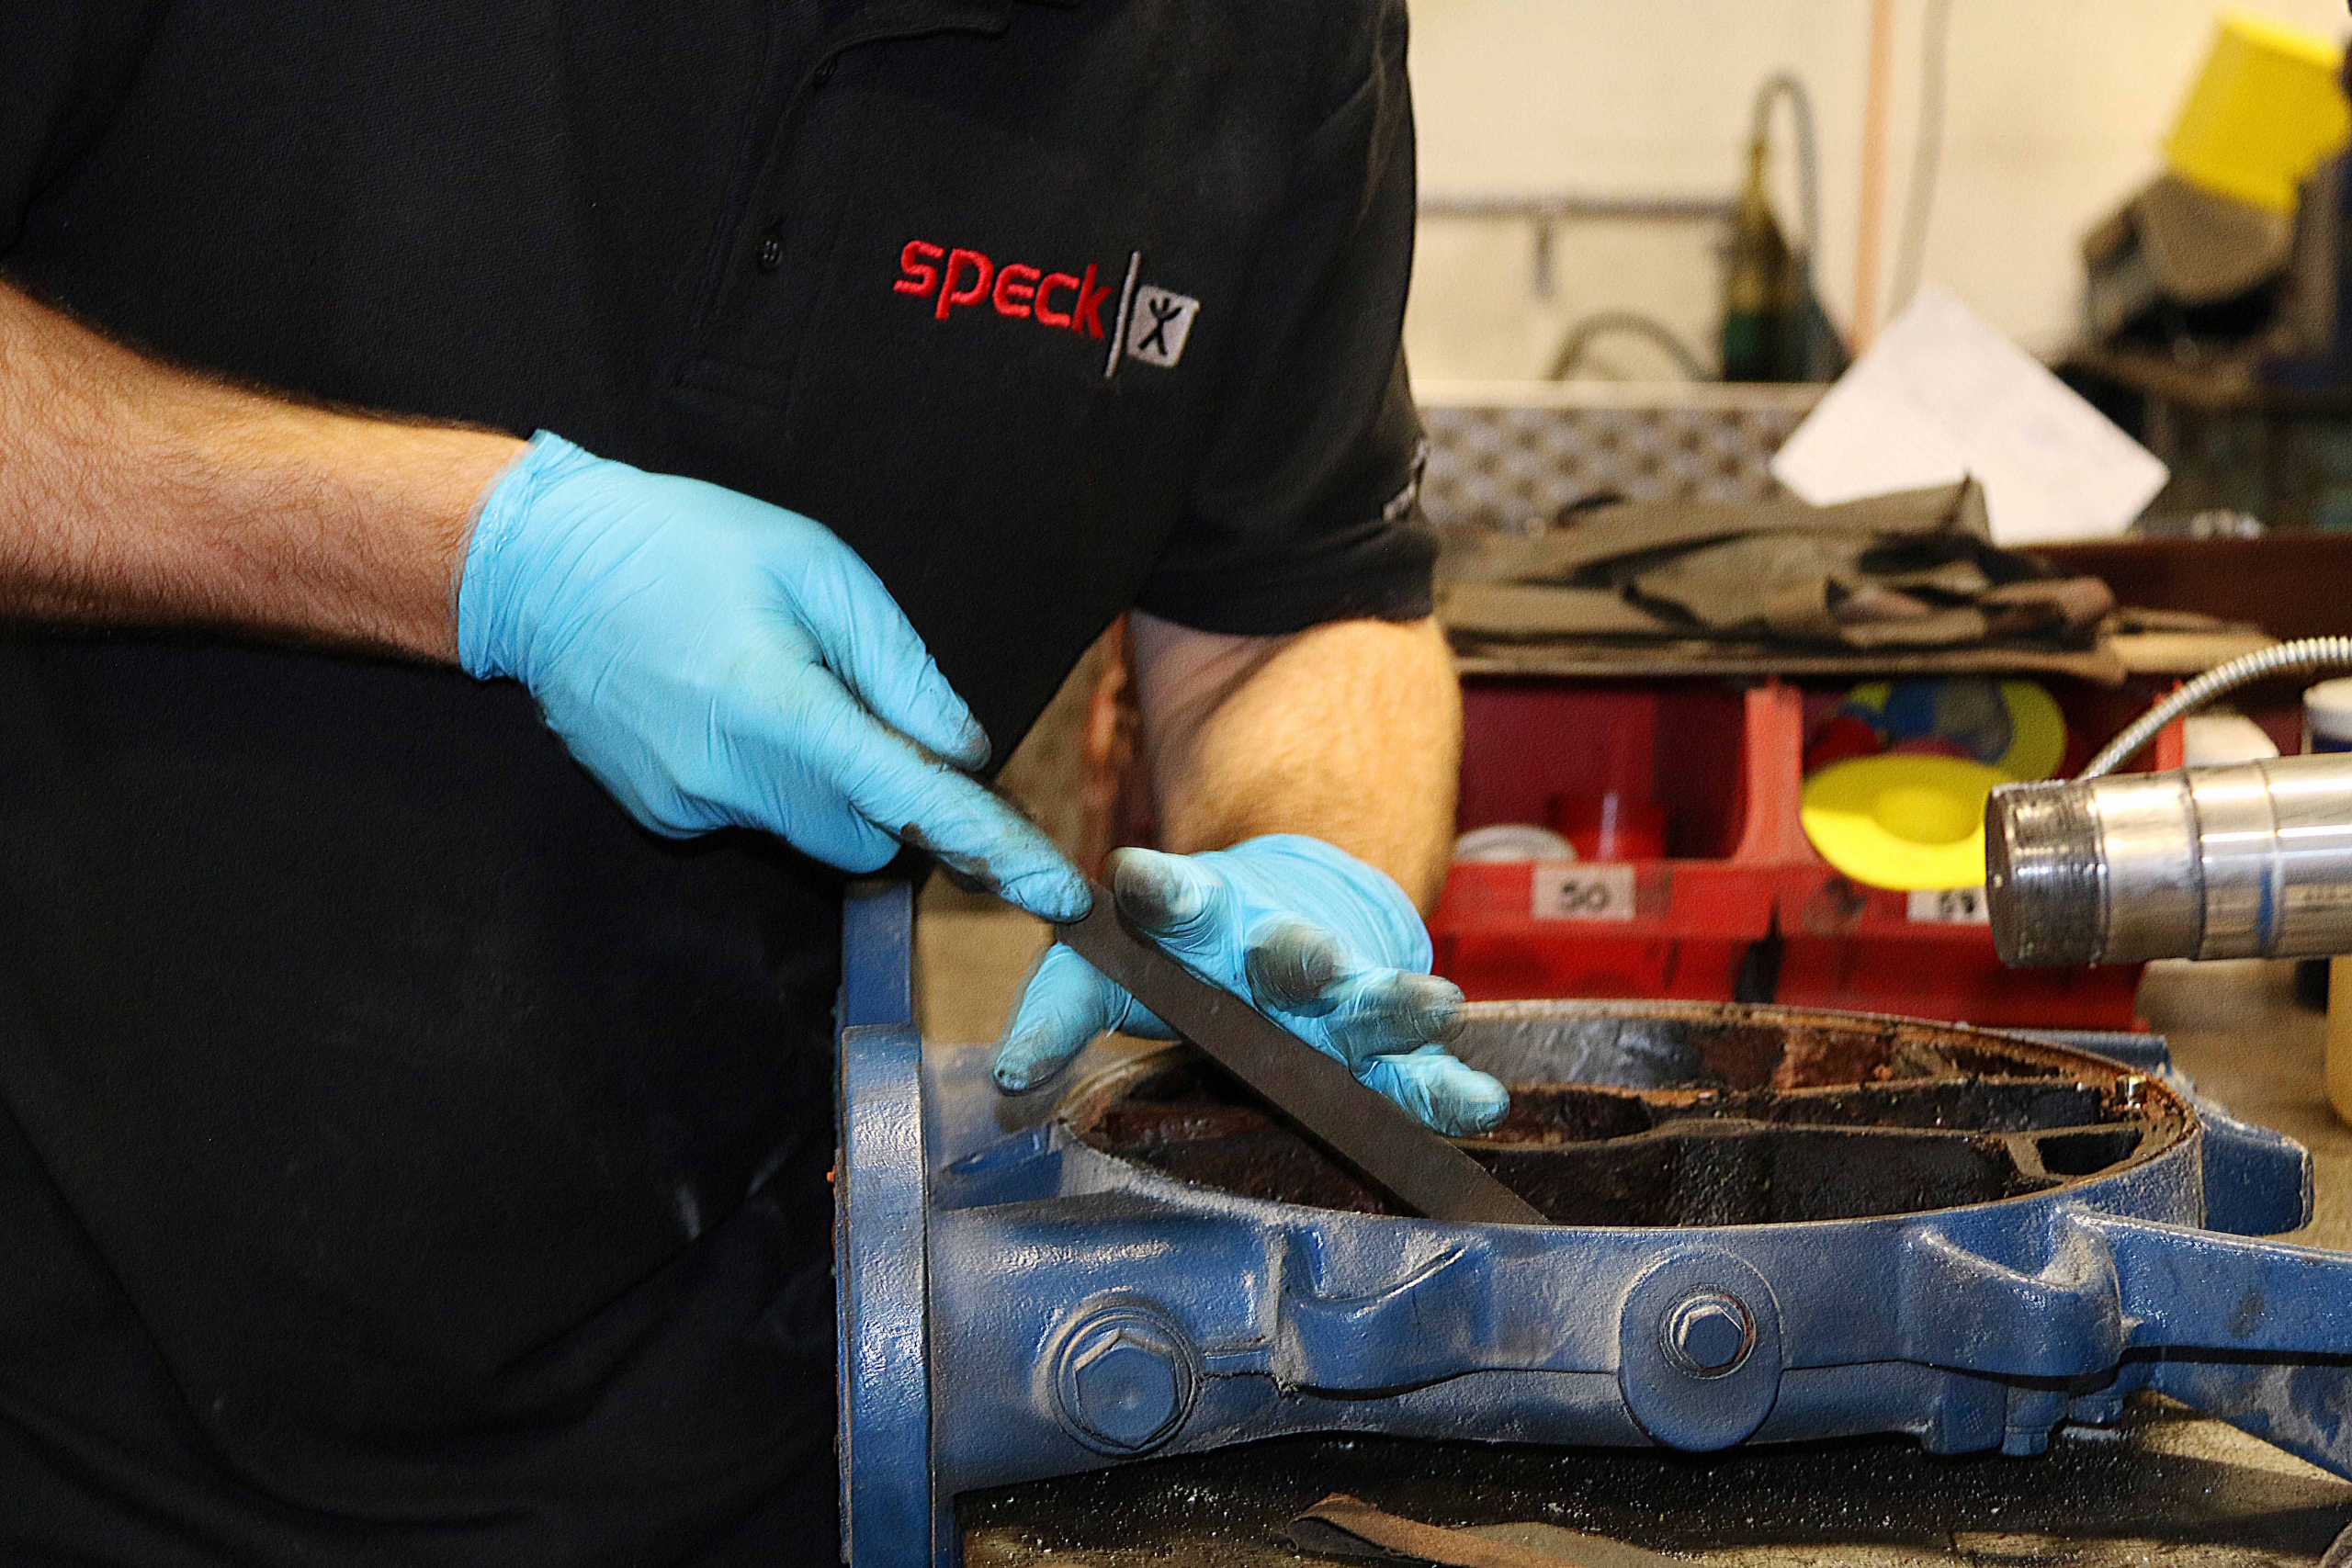 Hands on repairing Speck pump part